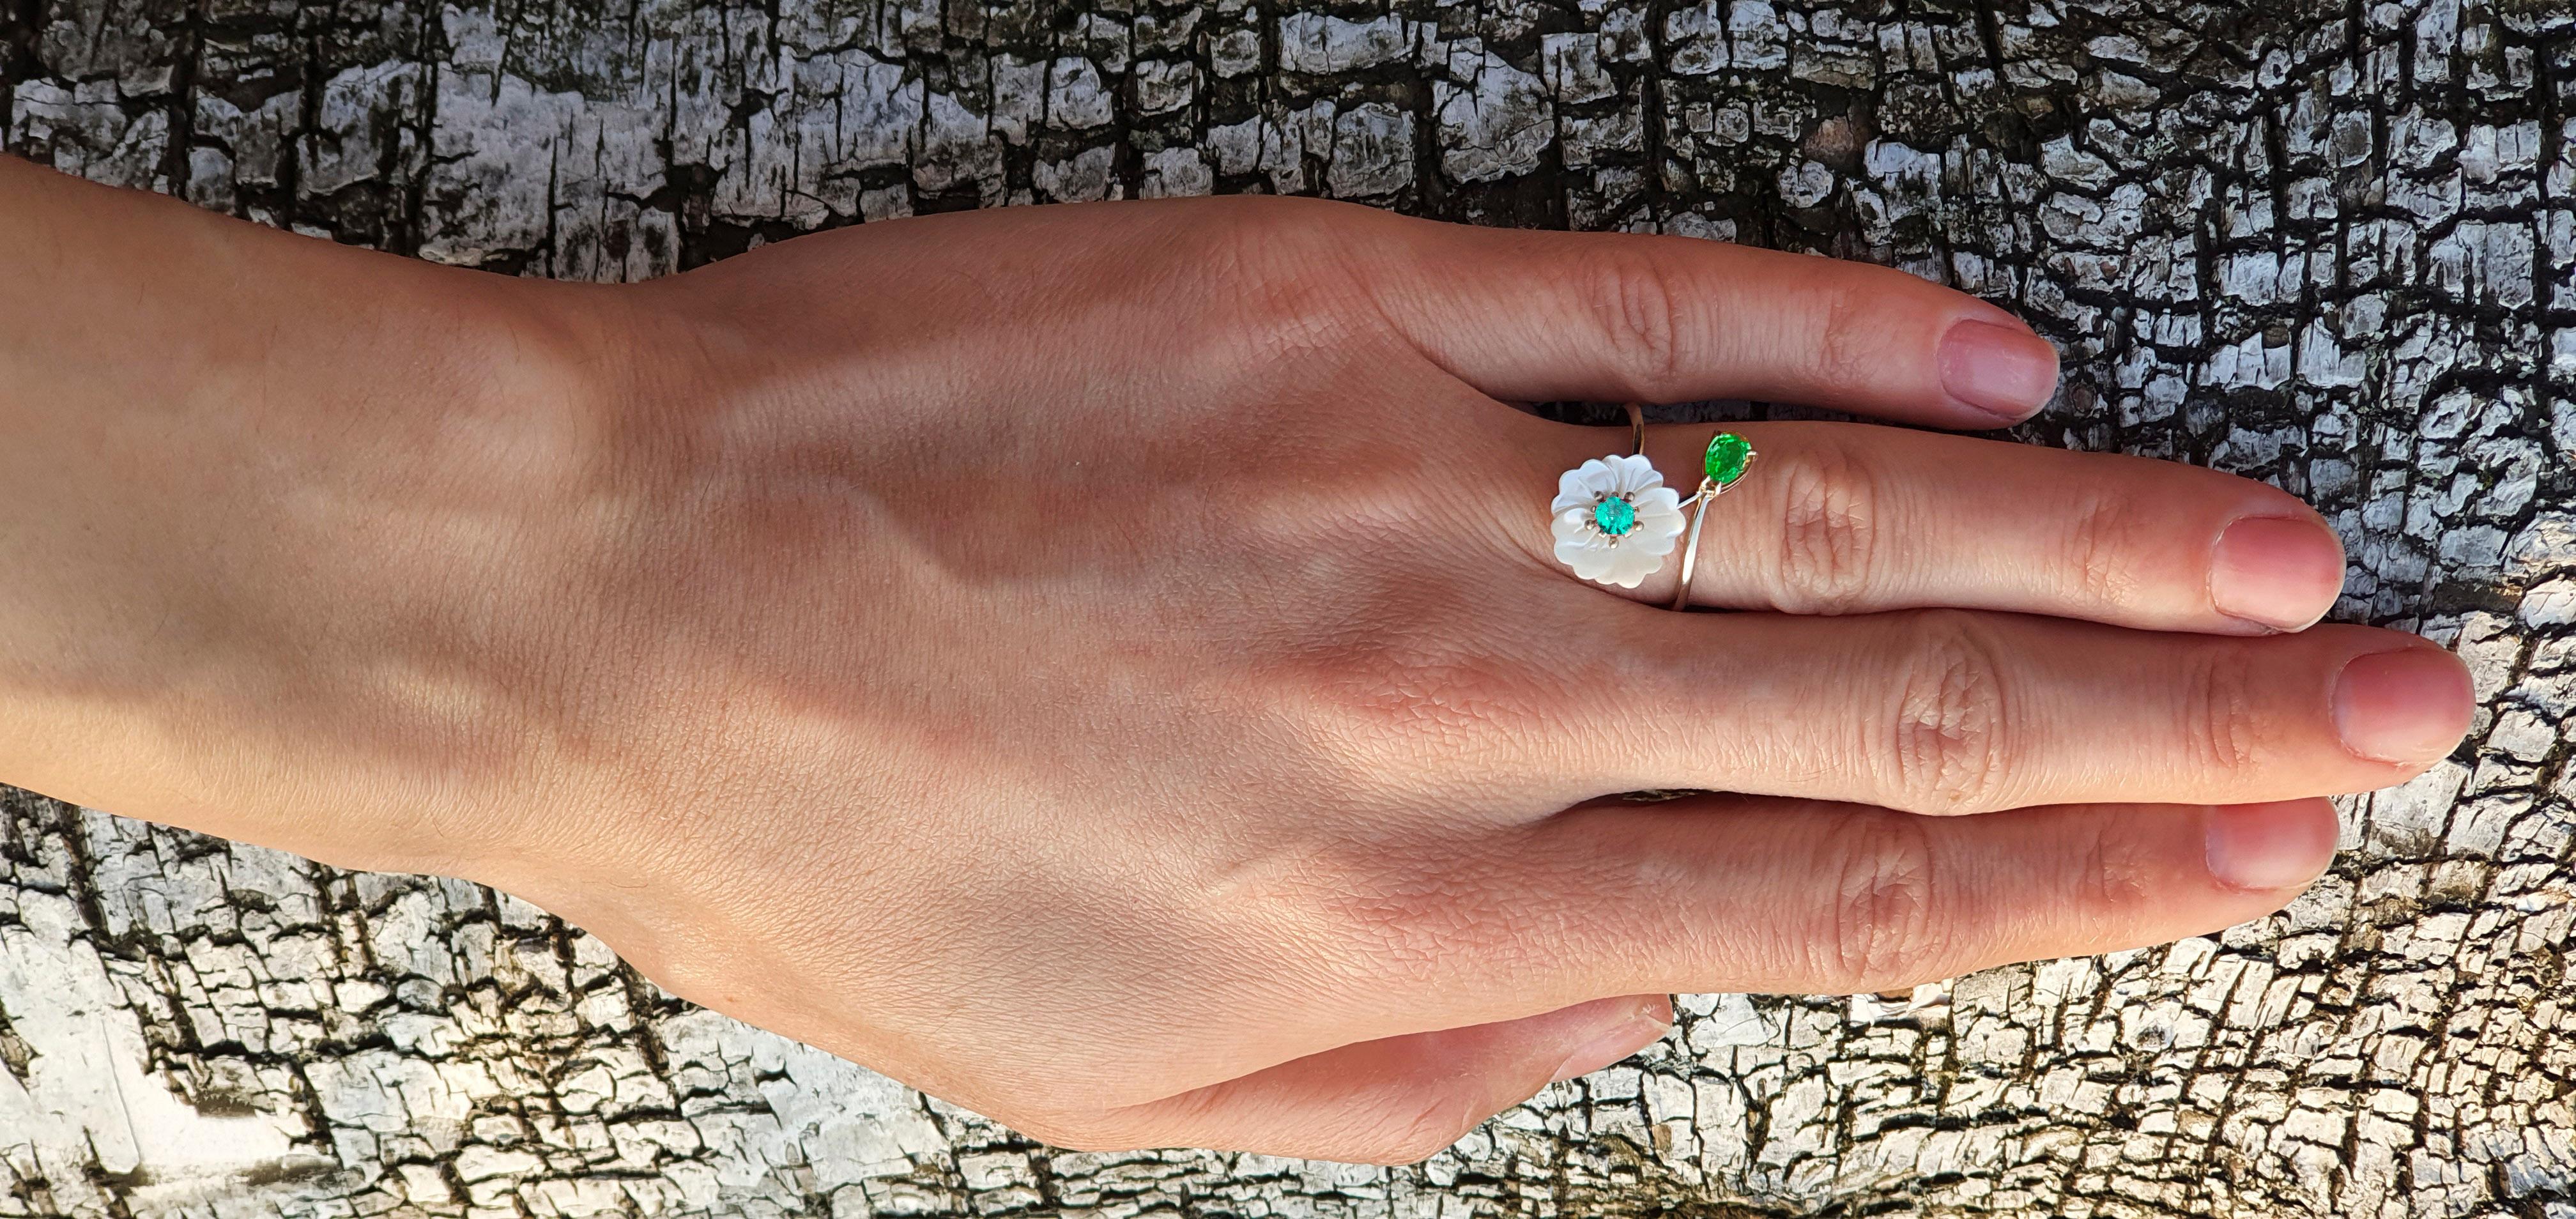 For Sale:  Carved Flower 14k ring with gemstones. 8